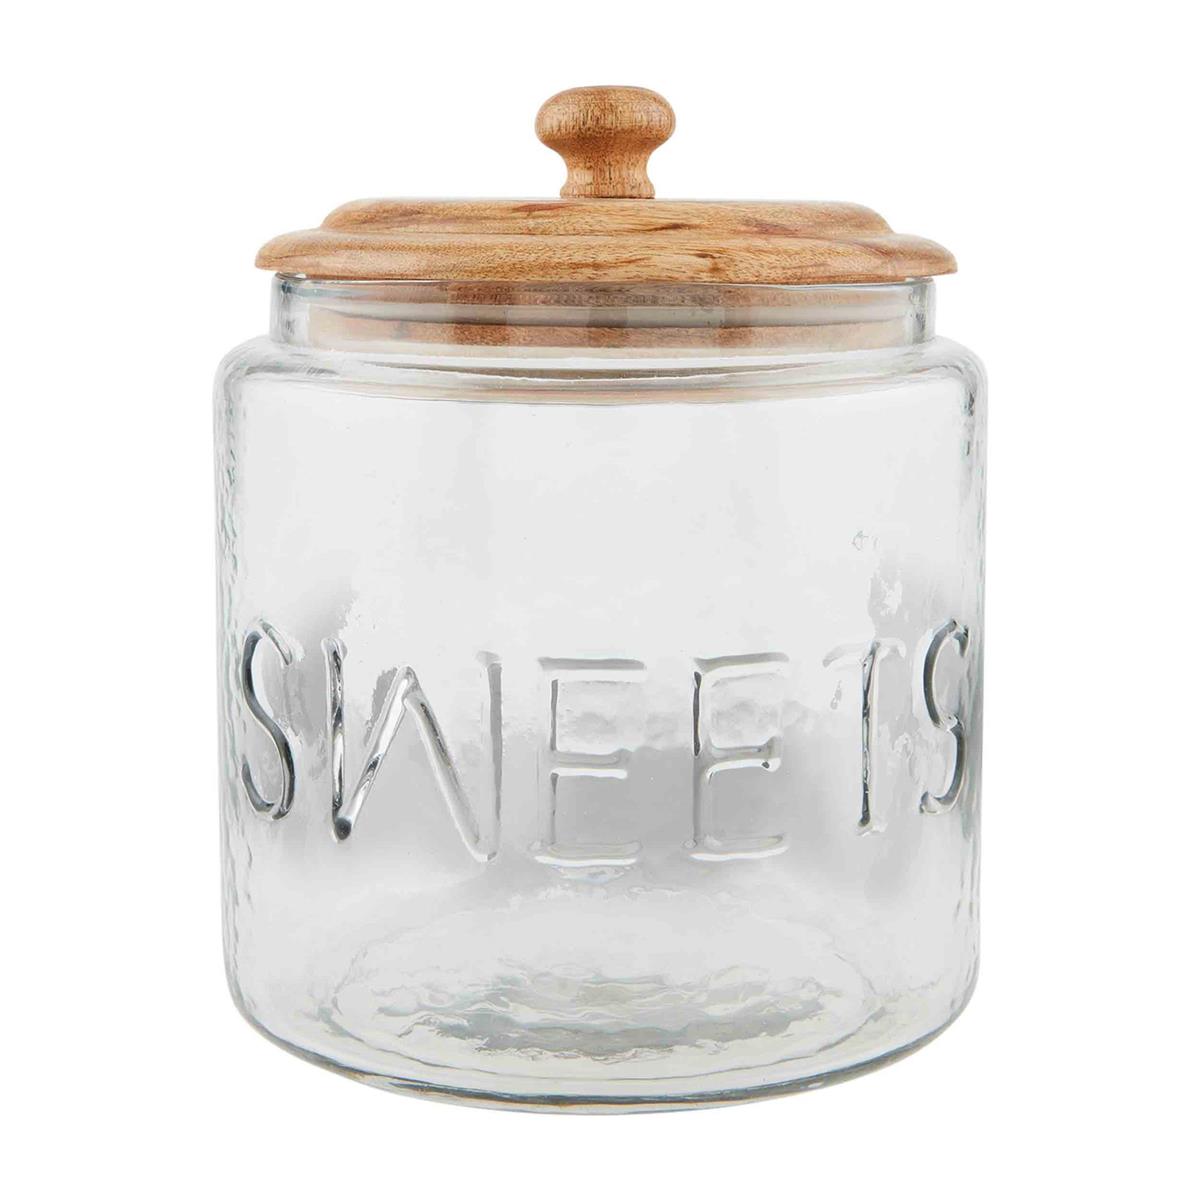 Sweets Jar